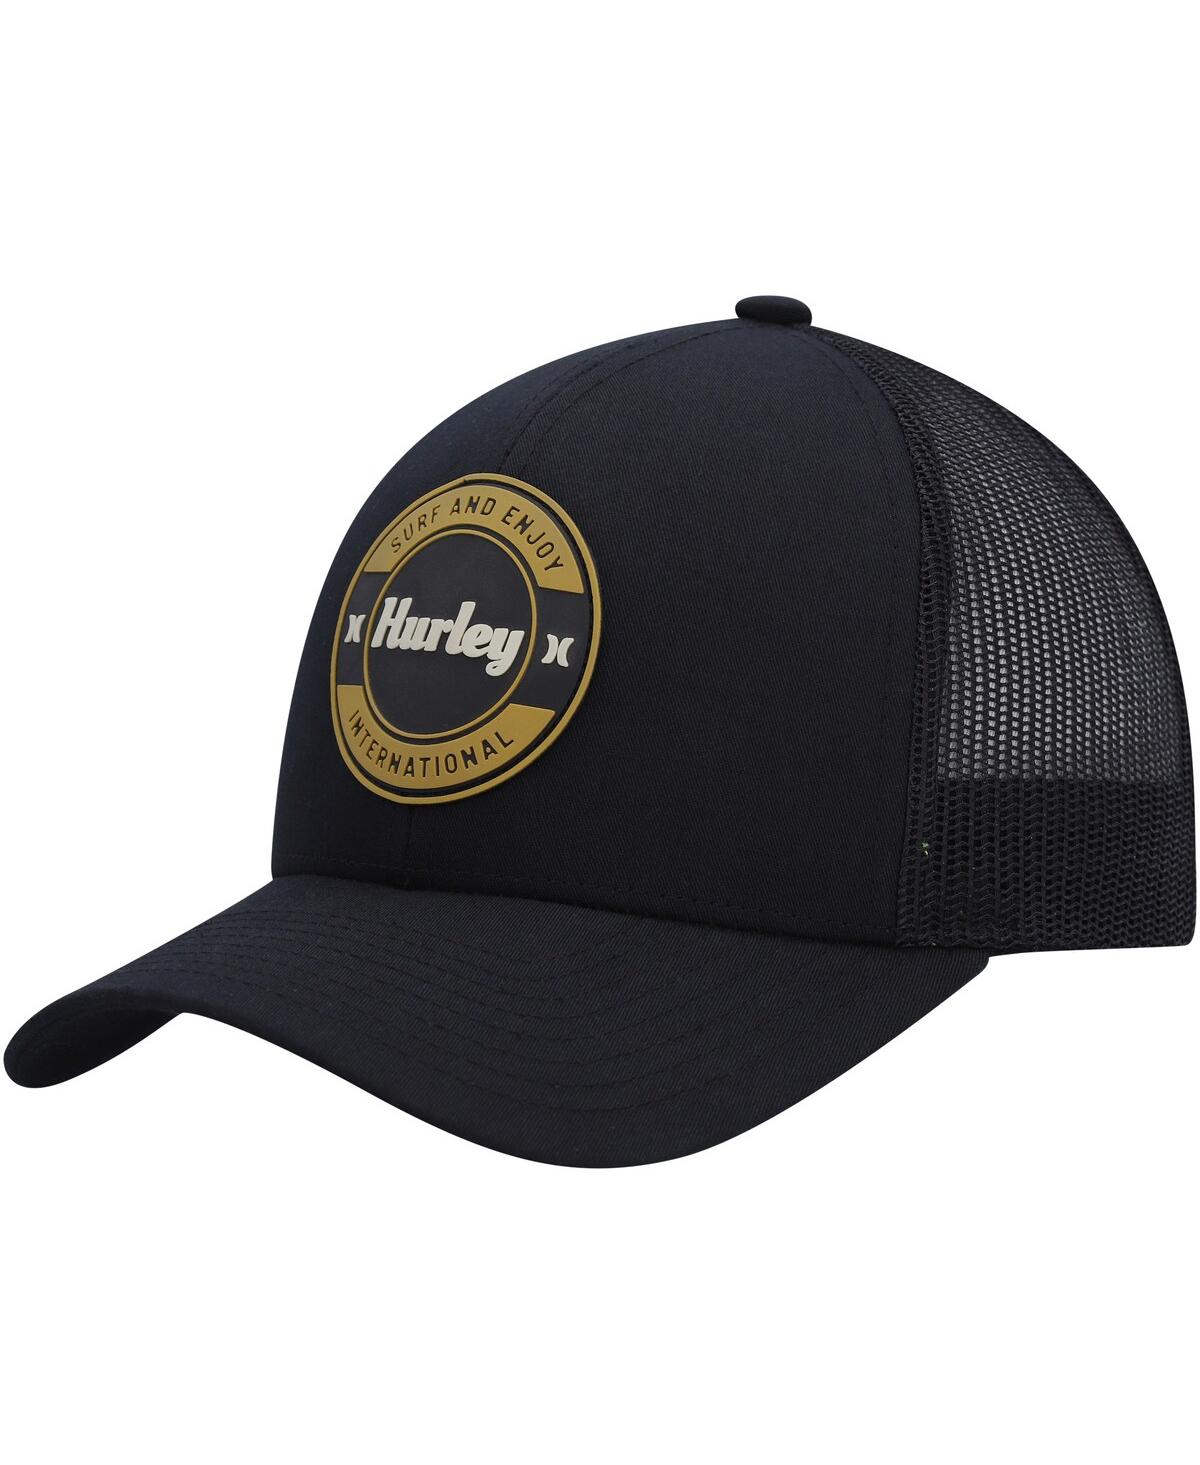 Men's Hurley Black Offshore Trucker Snapback Hat - Black